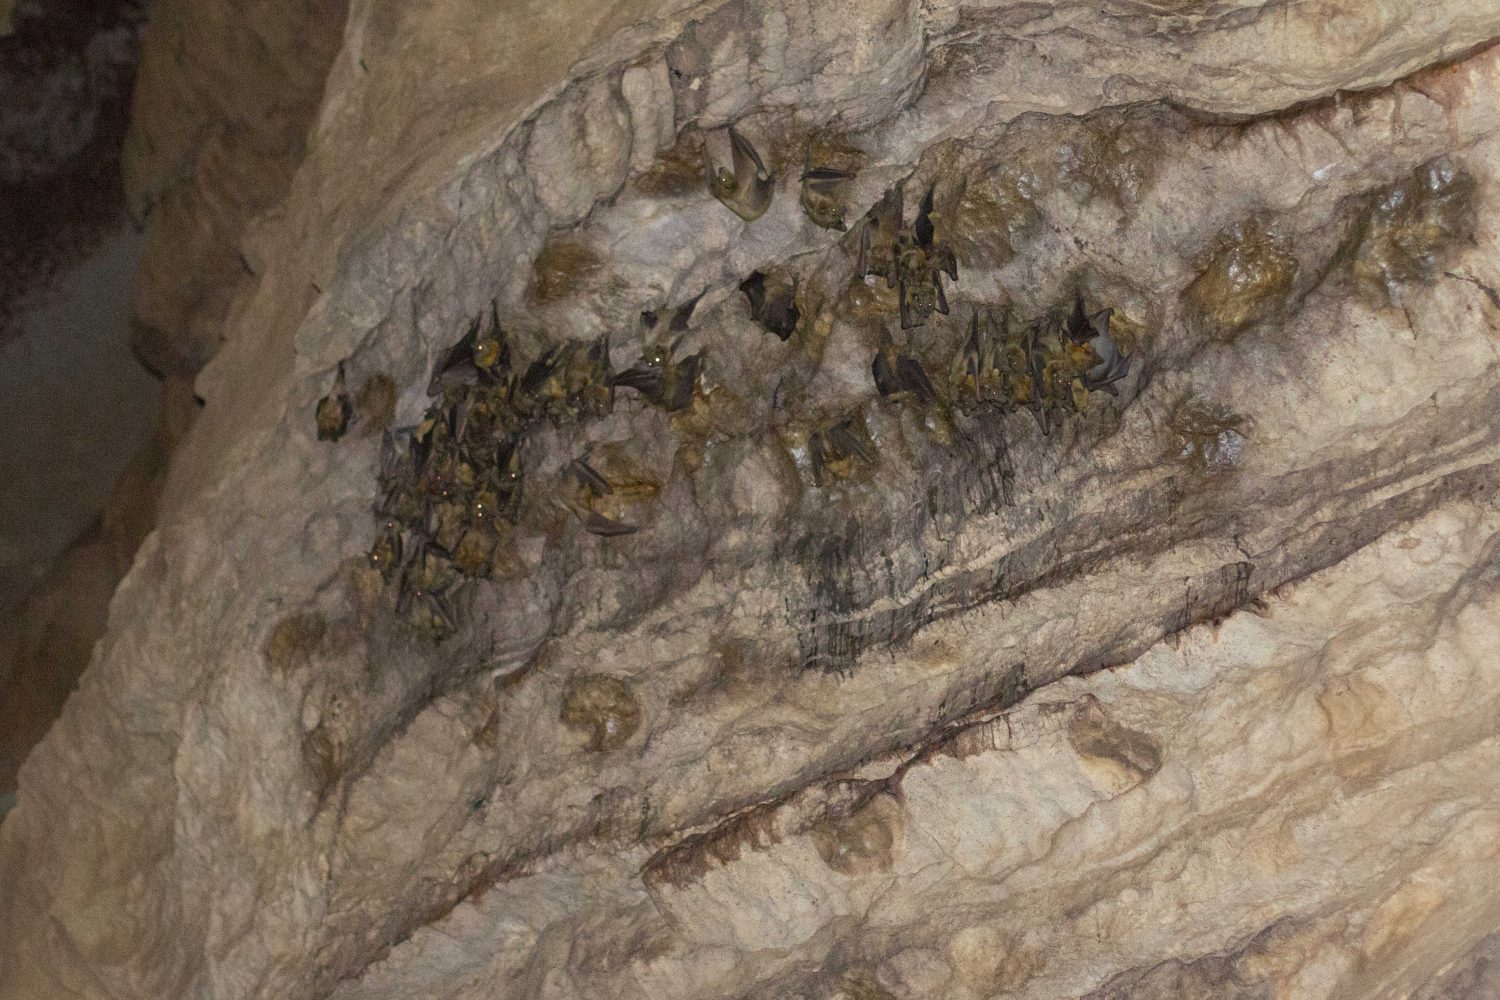 Ankarana caves Madagascar (2)